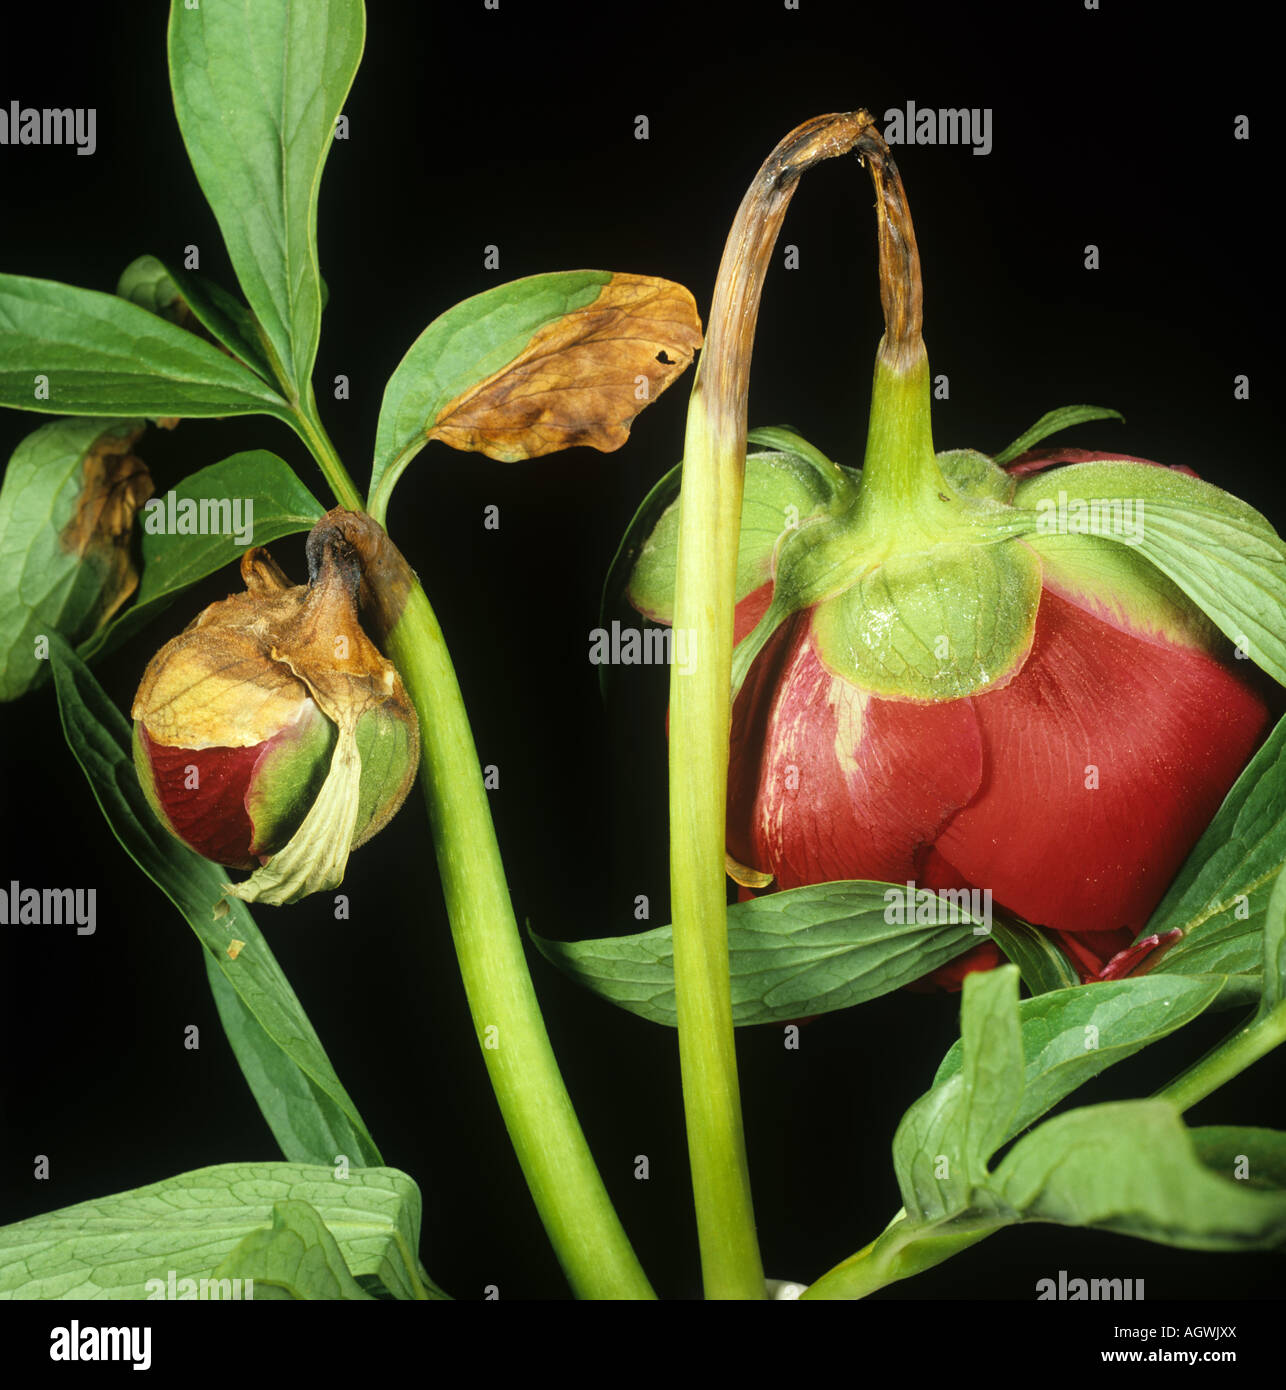 Peony wilt or blight (Botrytis paeoniae) diseased flower buds on a peony plant Stock Photo